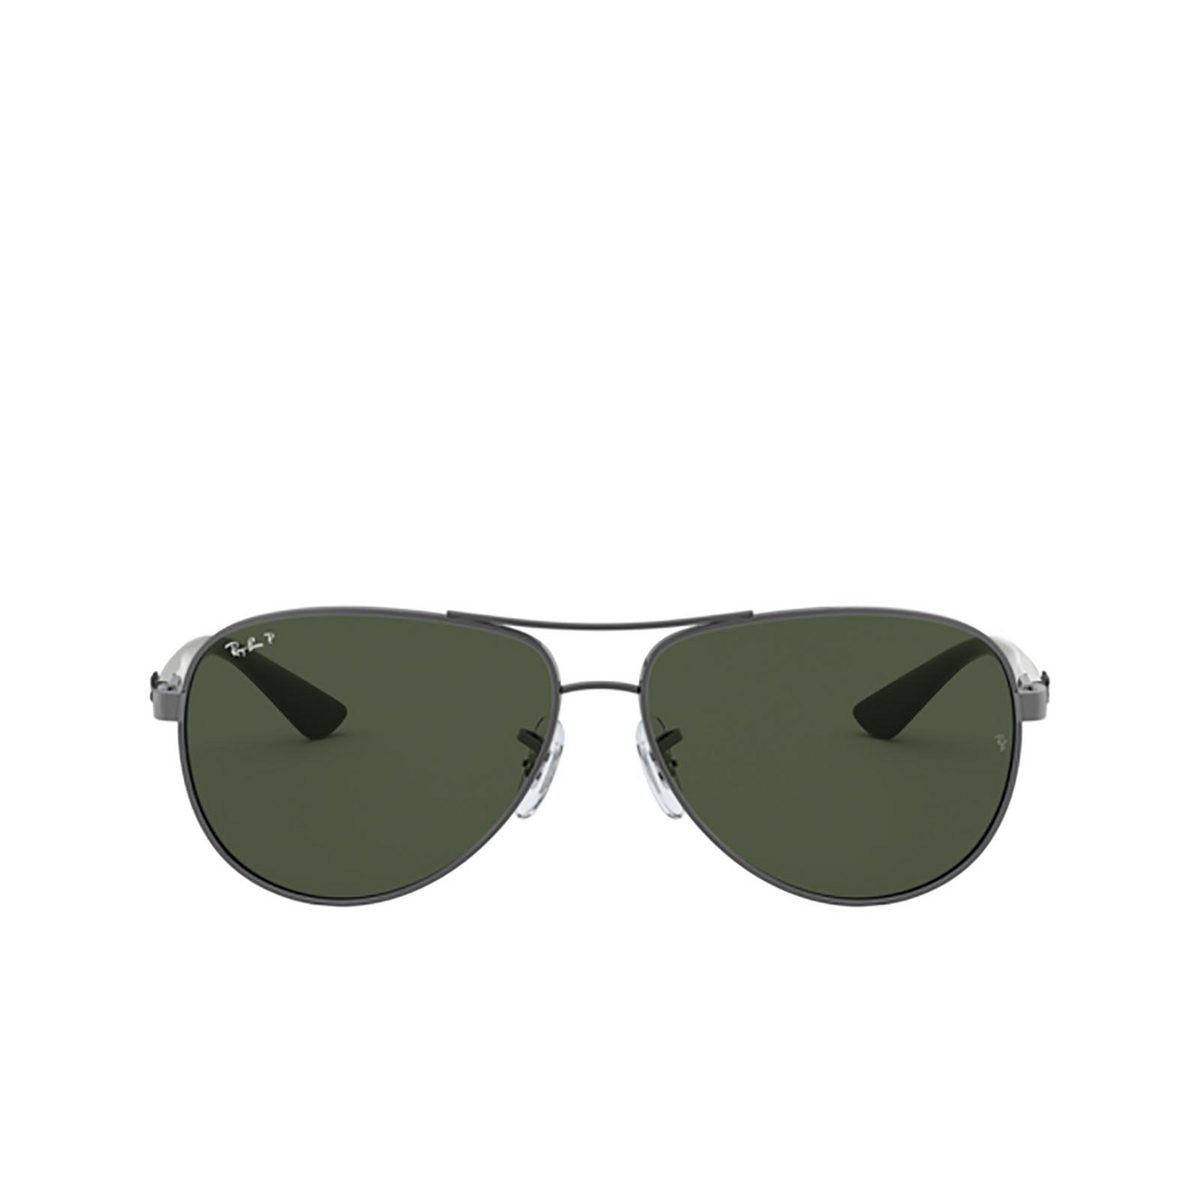 Ray-Ban CARBON FIBRE Sunglasses 004/N5 GUNMETAL - front view